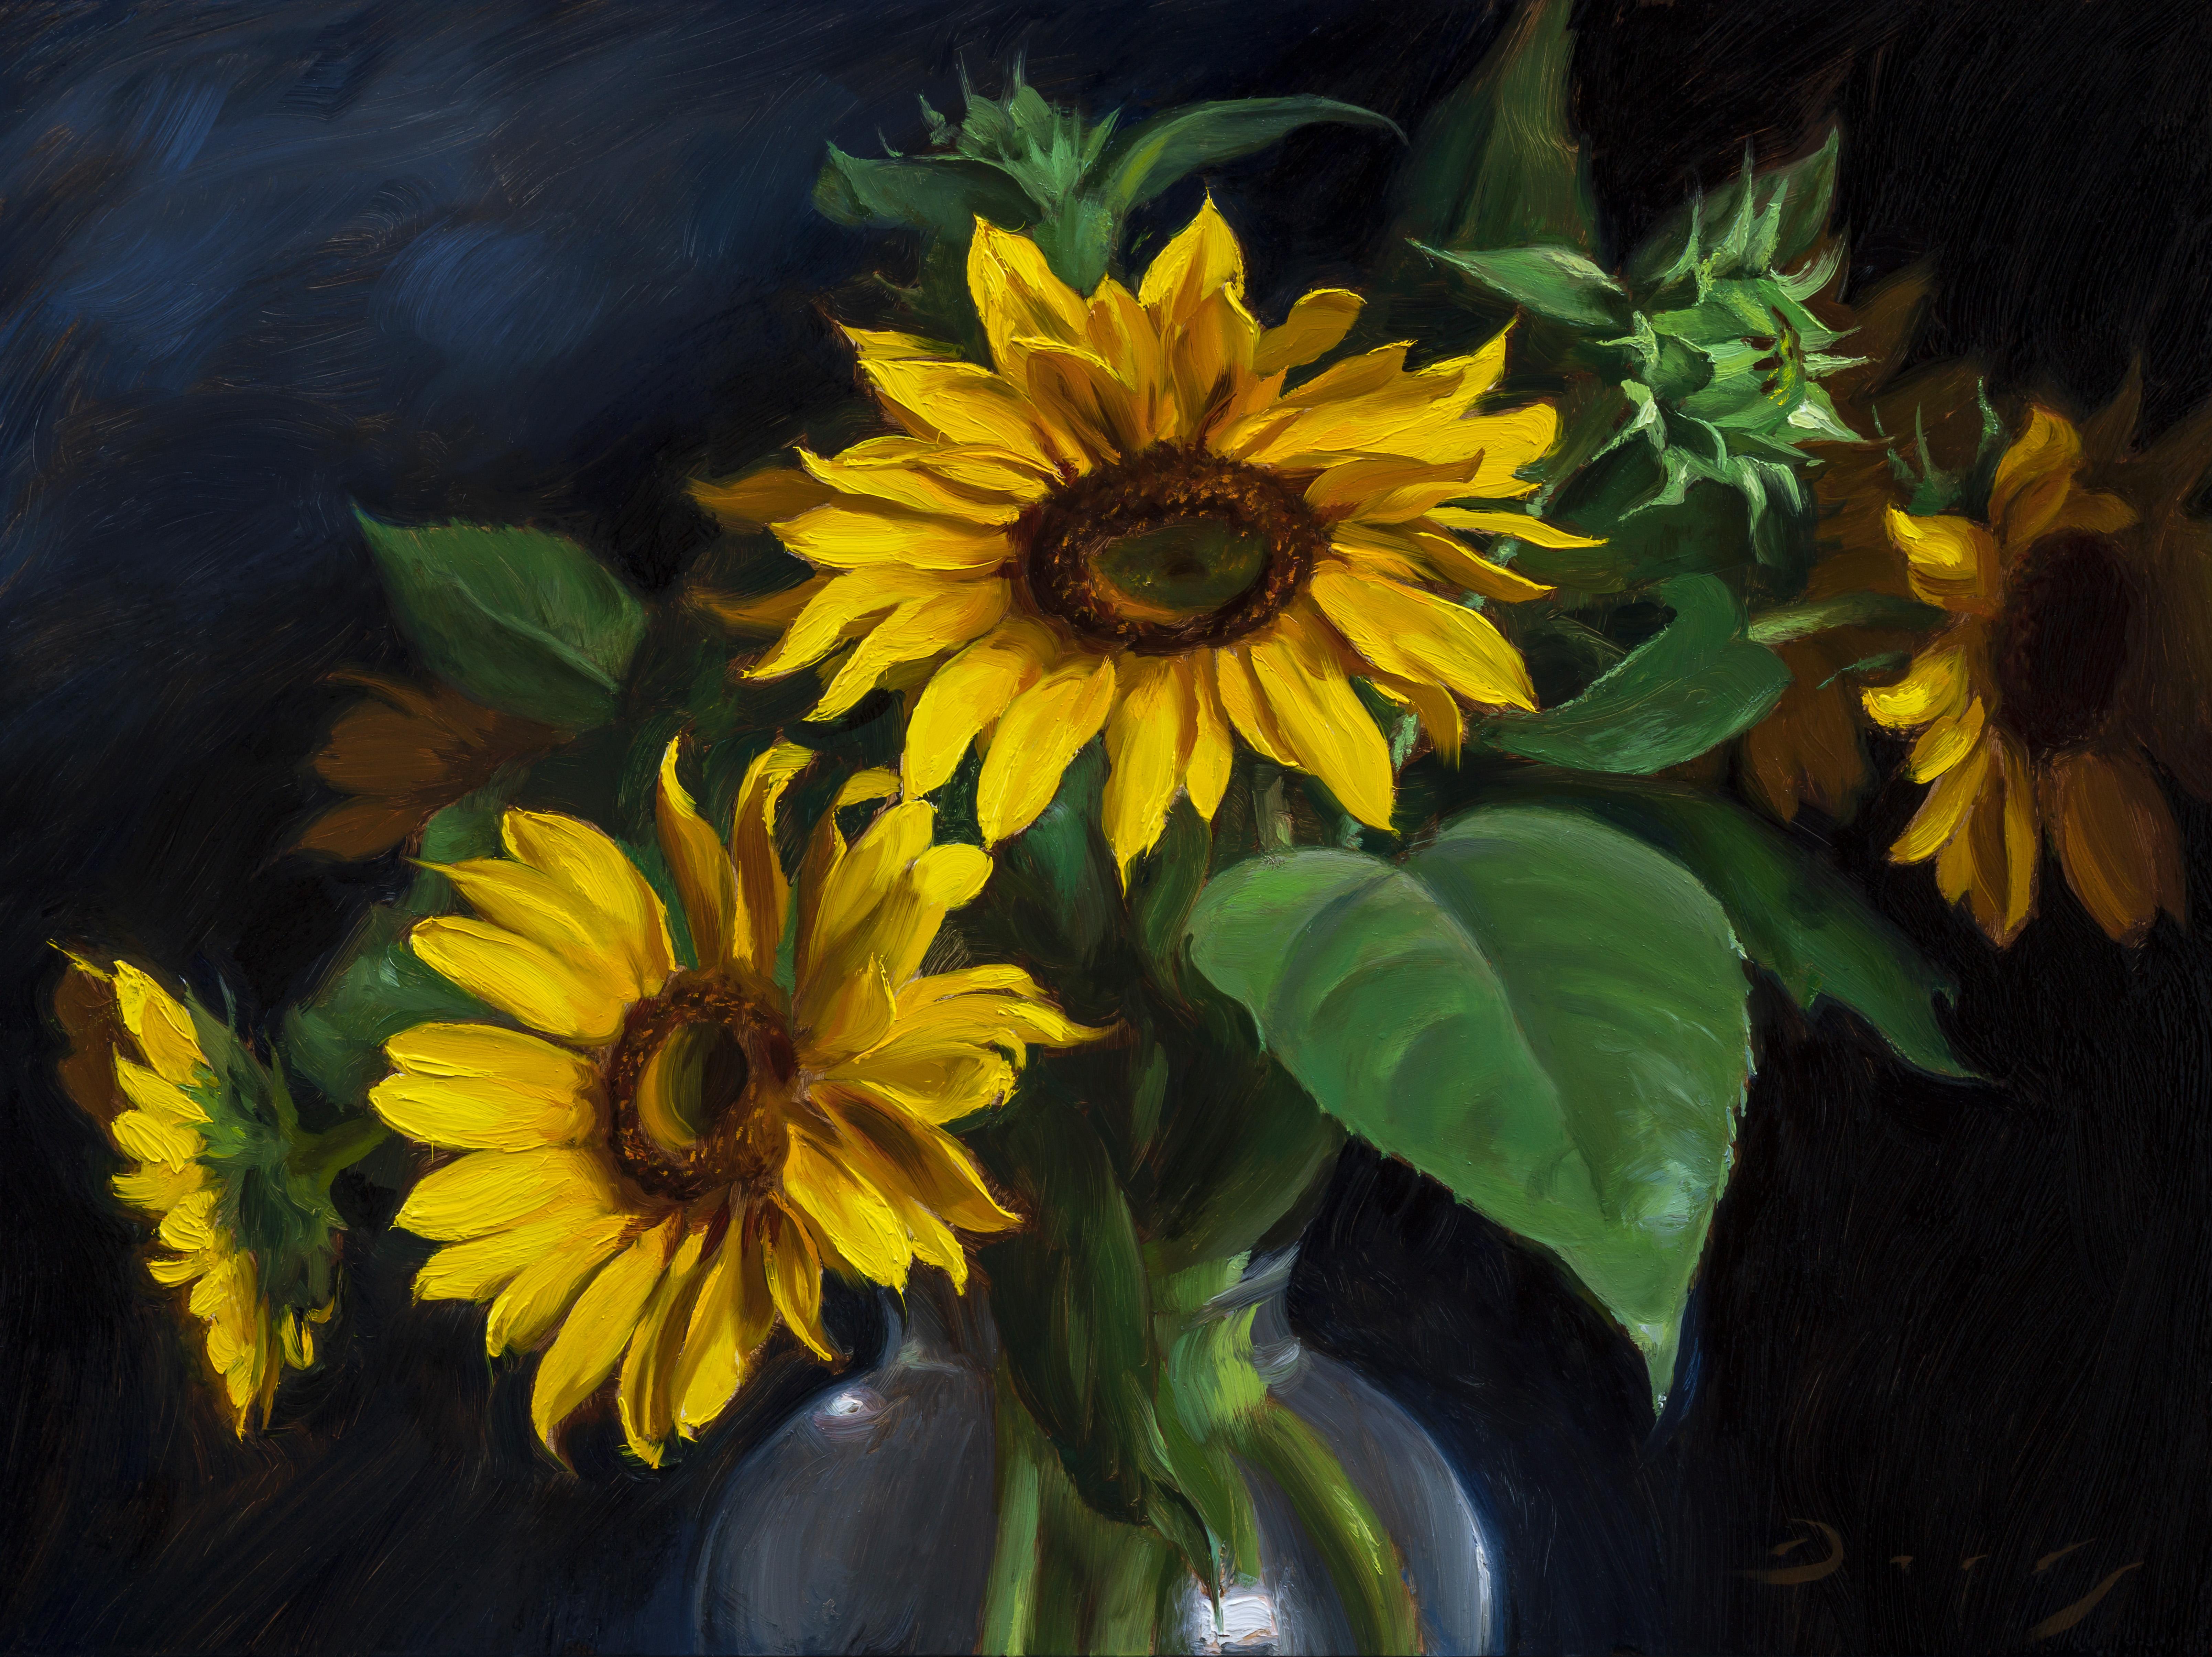 Joseph Q. Daily Still-Life Painting - Realist oil painting, "Sunflowers" 